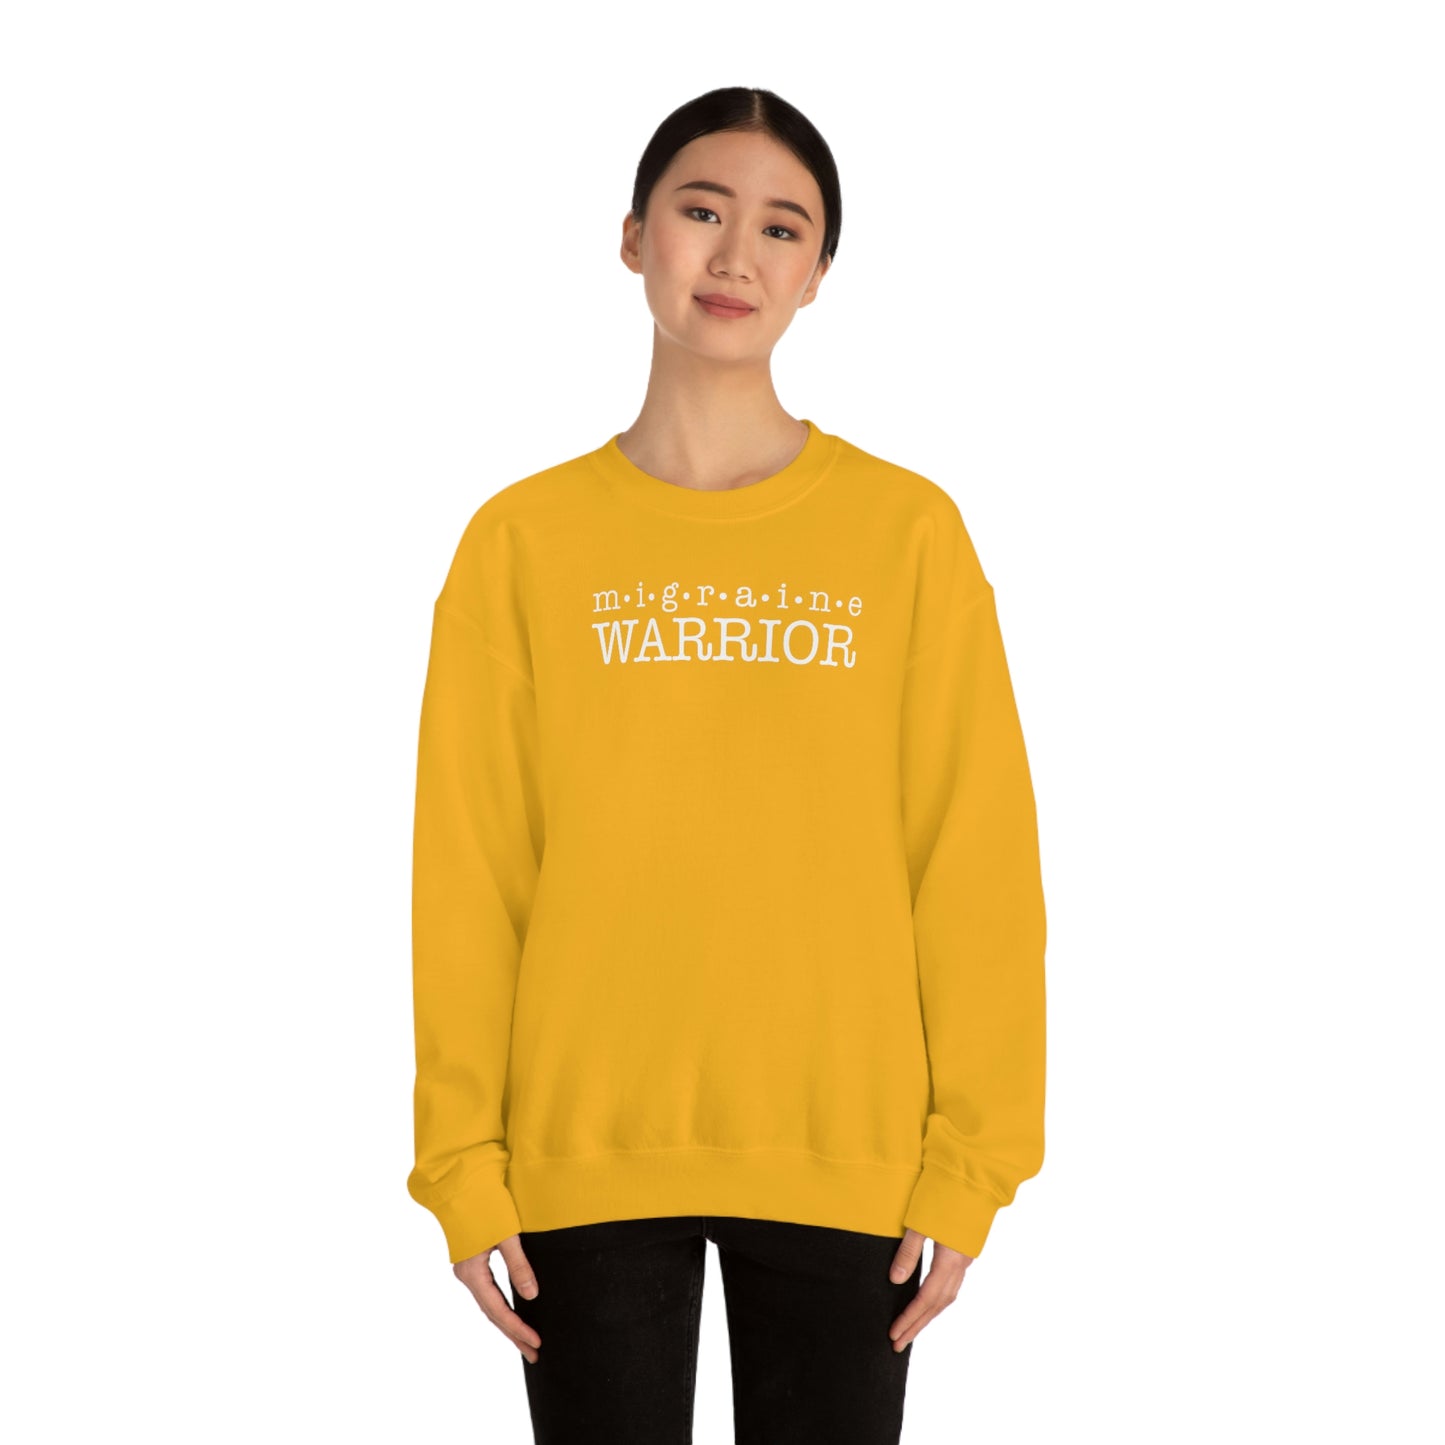 Migraine Warrior Dark Crewneck Sweatshirts